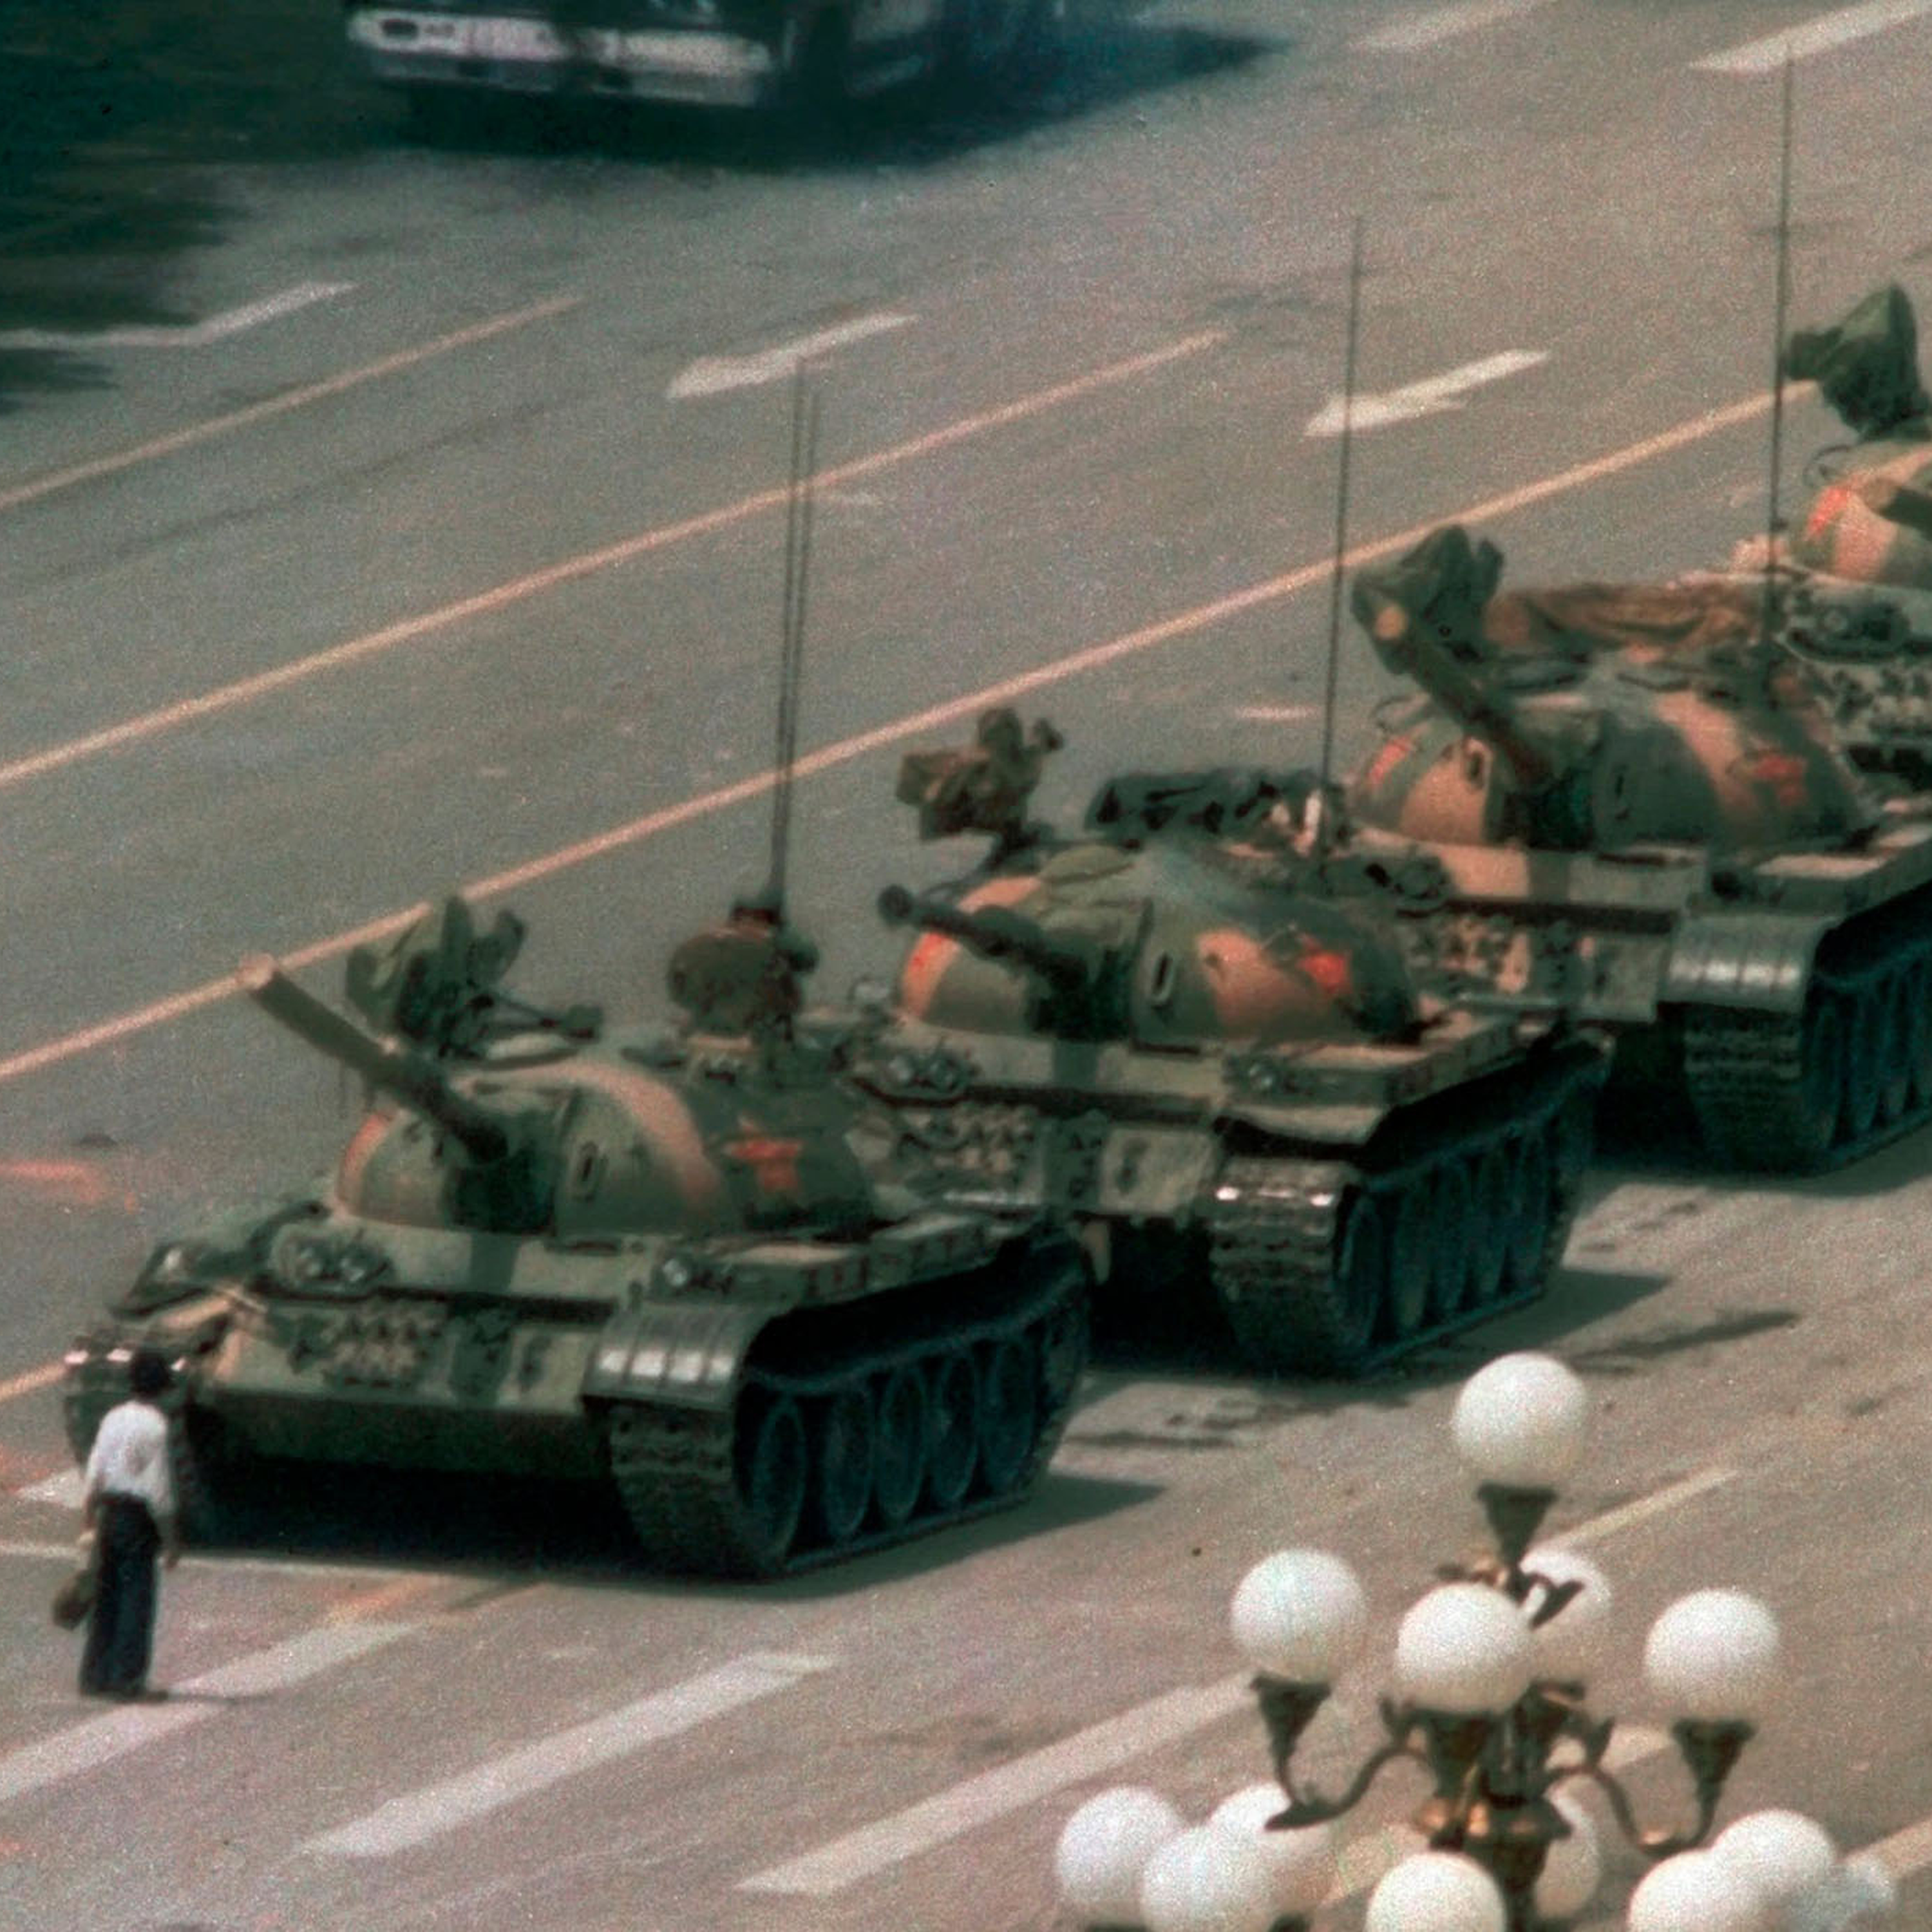 Rebroadcast: 6/4 - UK Cable on the Tiananmen Square Massacre